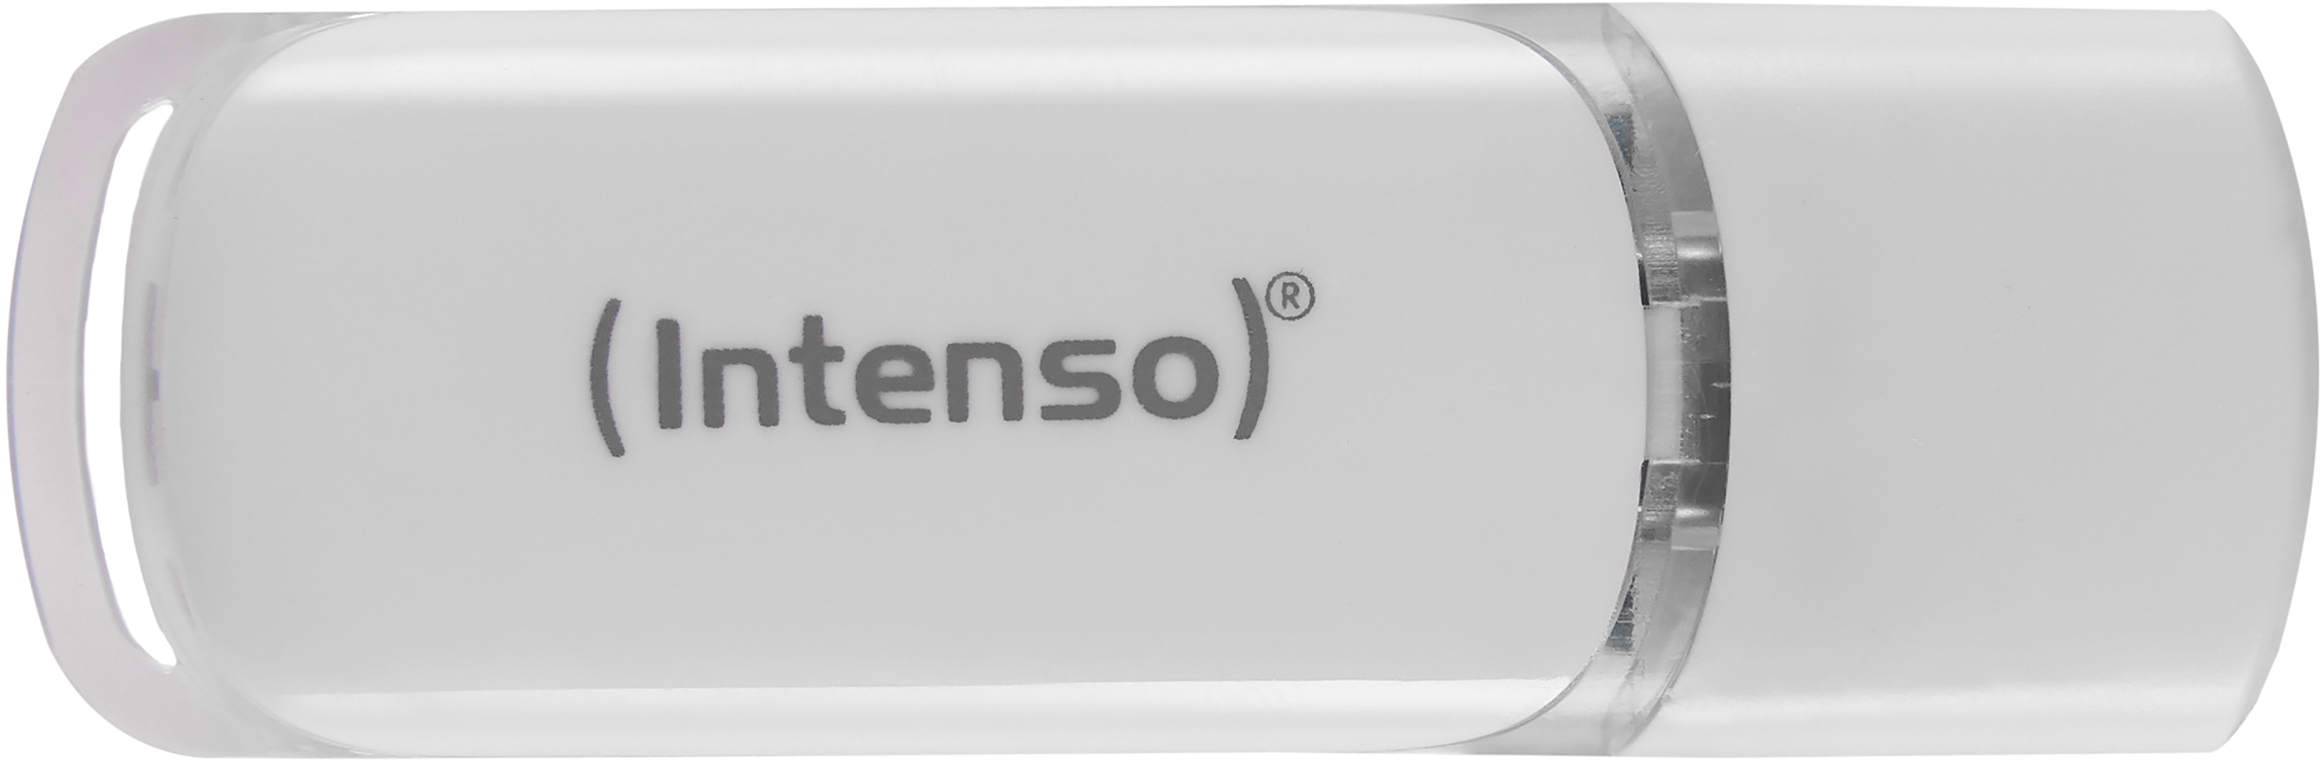 INTENSO USB-Stick Flash Line 128GB 3538491 USB 3.1 Type-C